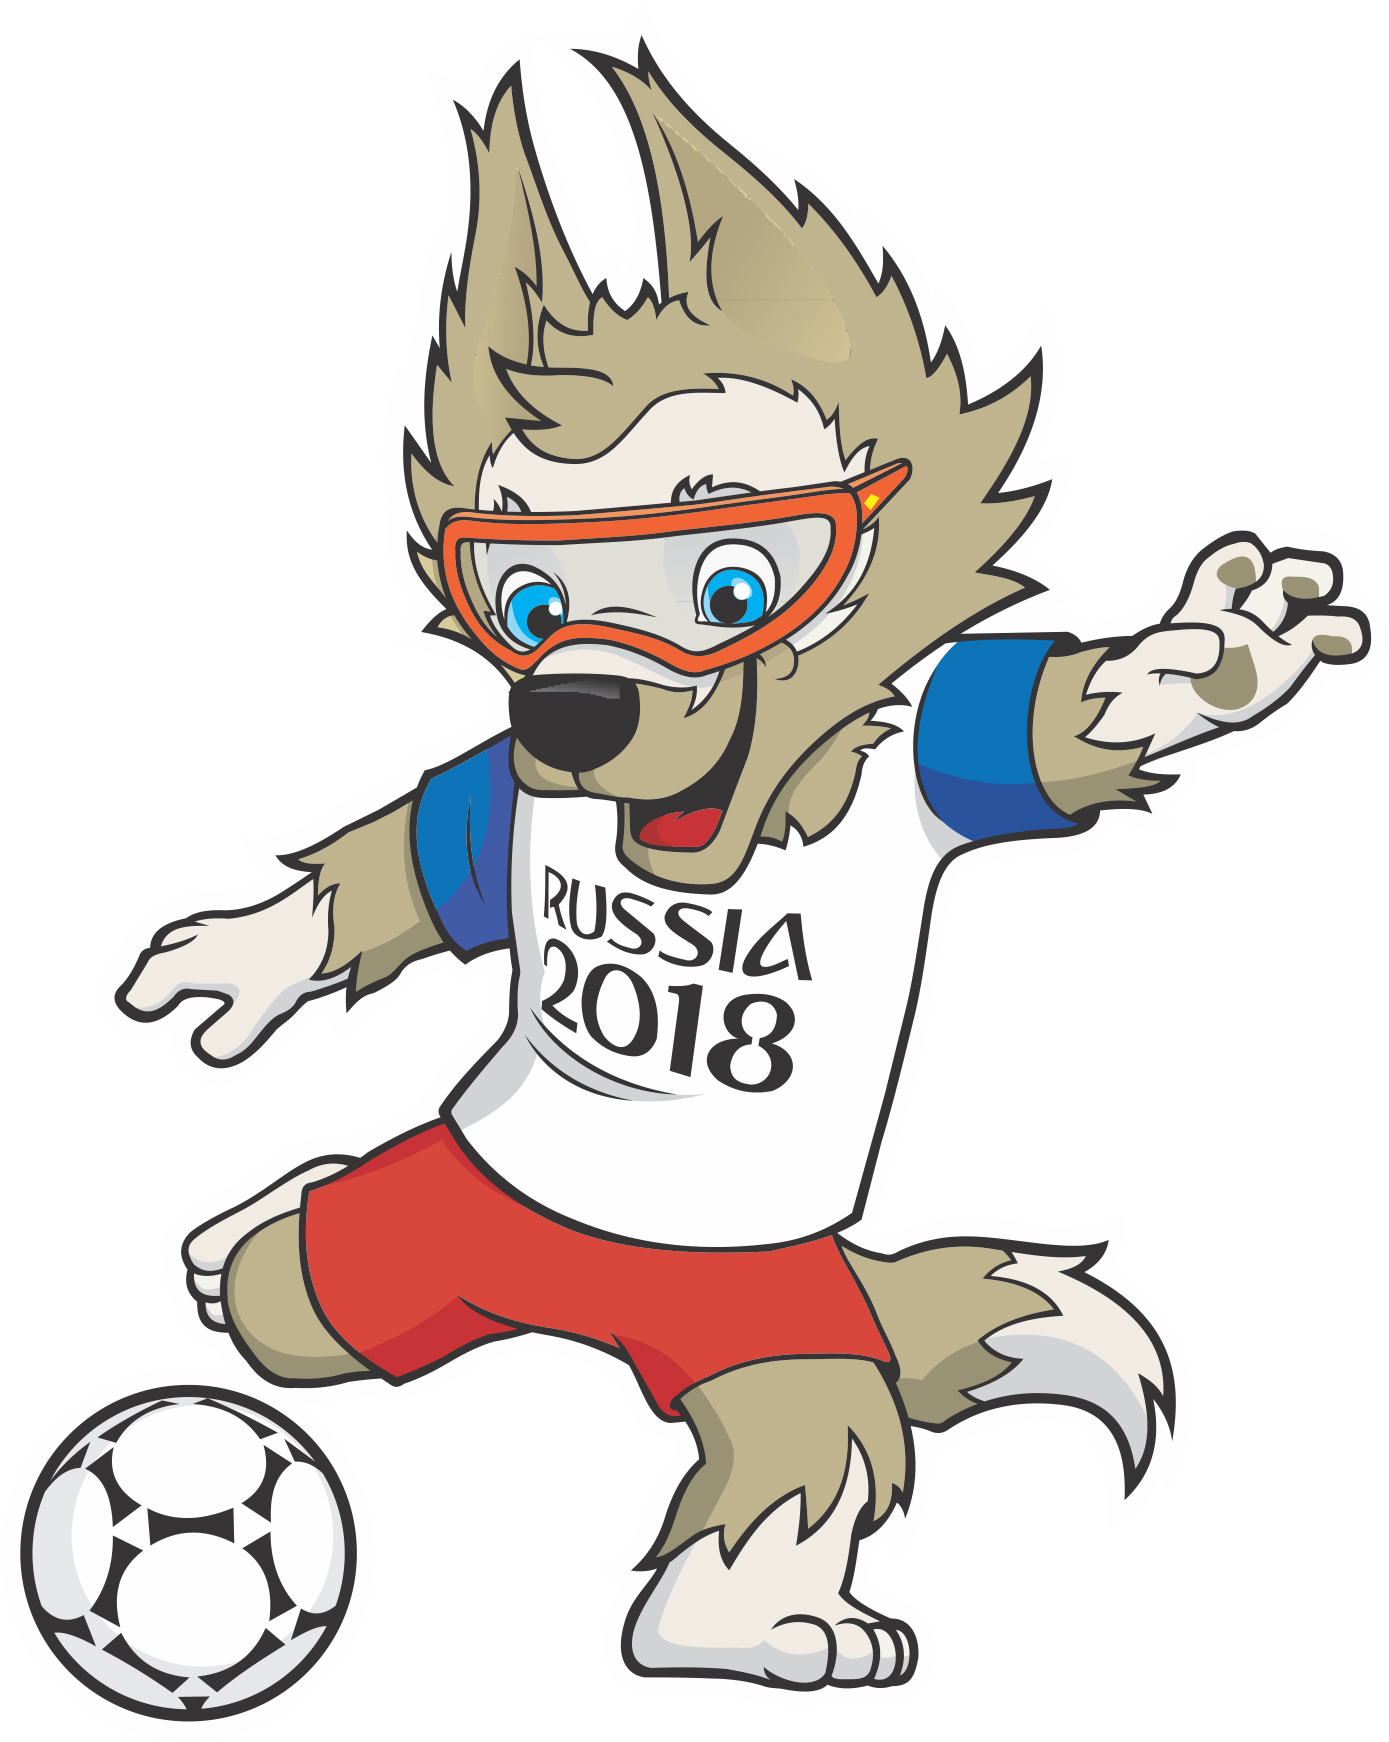 Copa do Mundo Rússia 2018 - Mascote Zabivaka